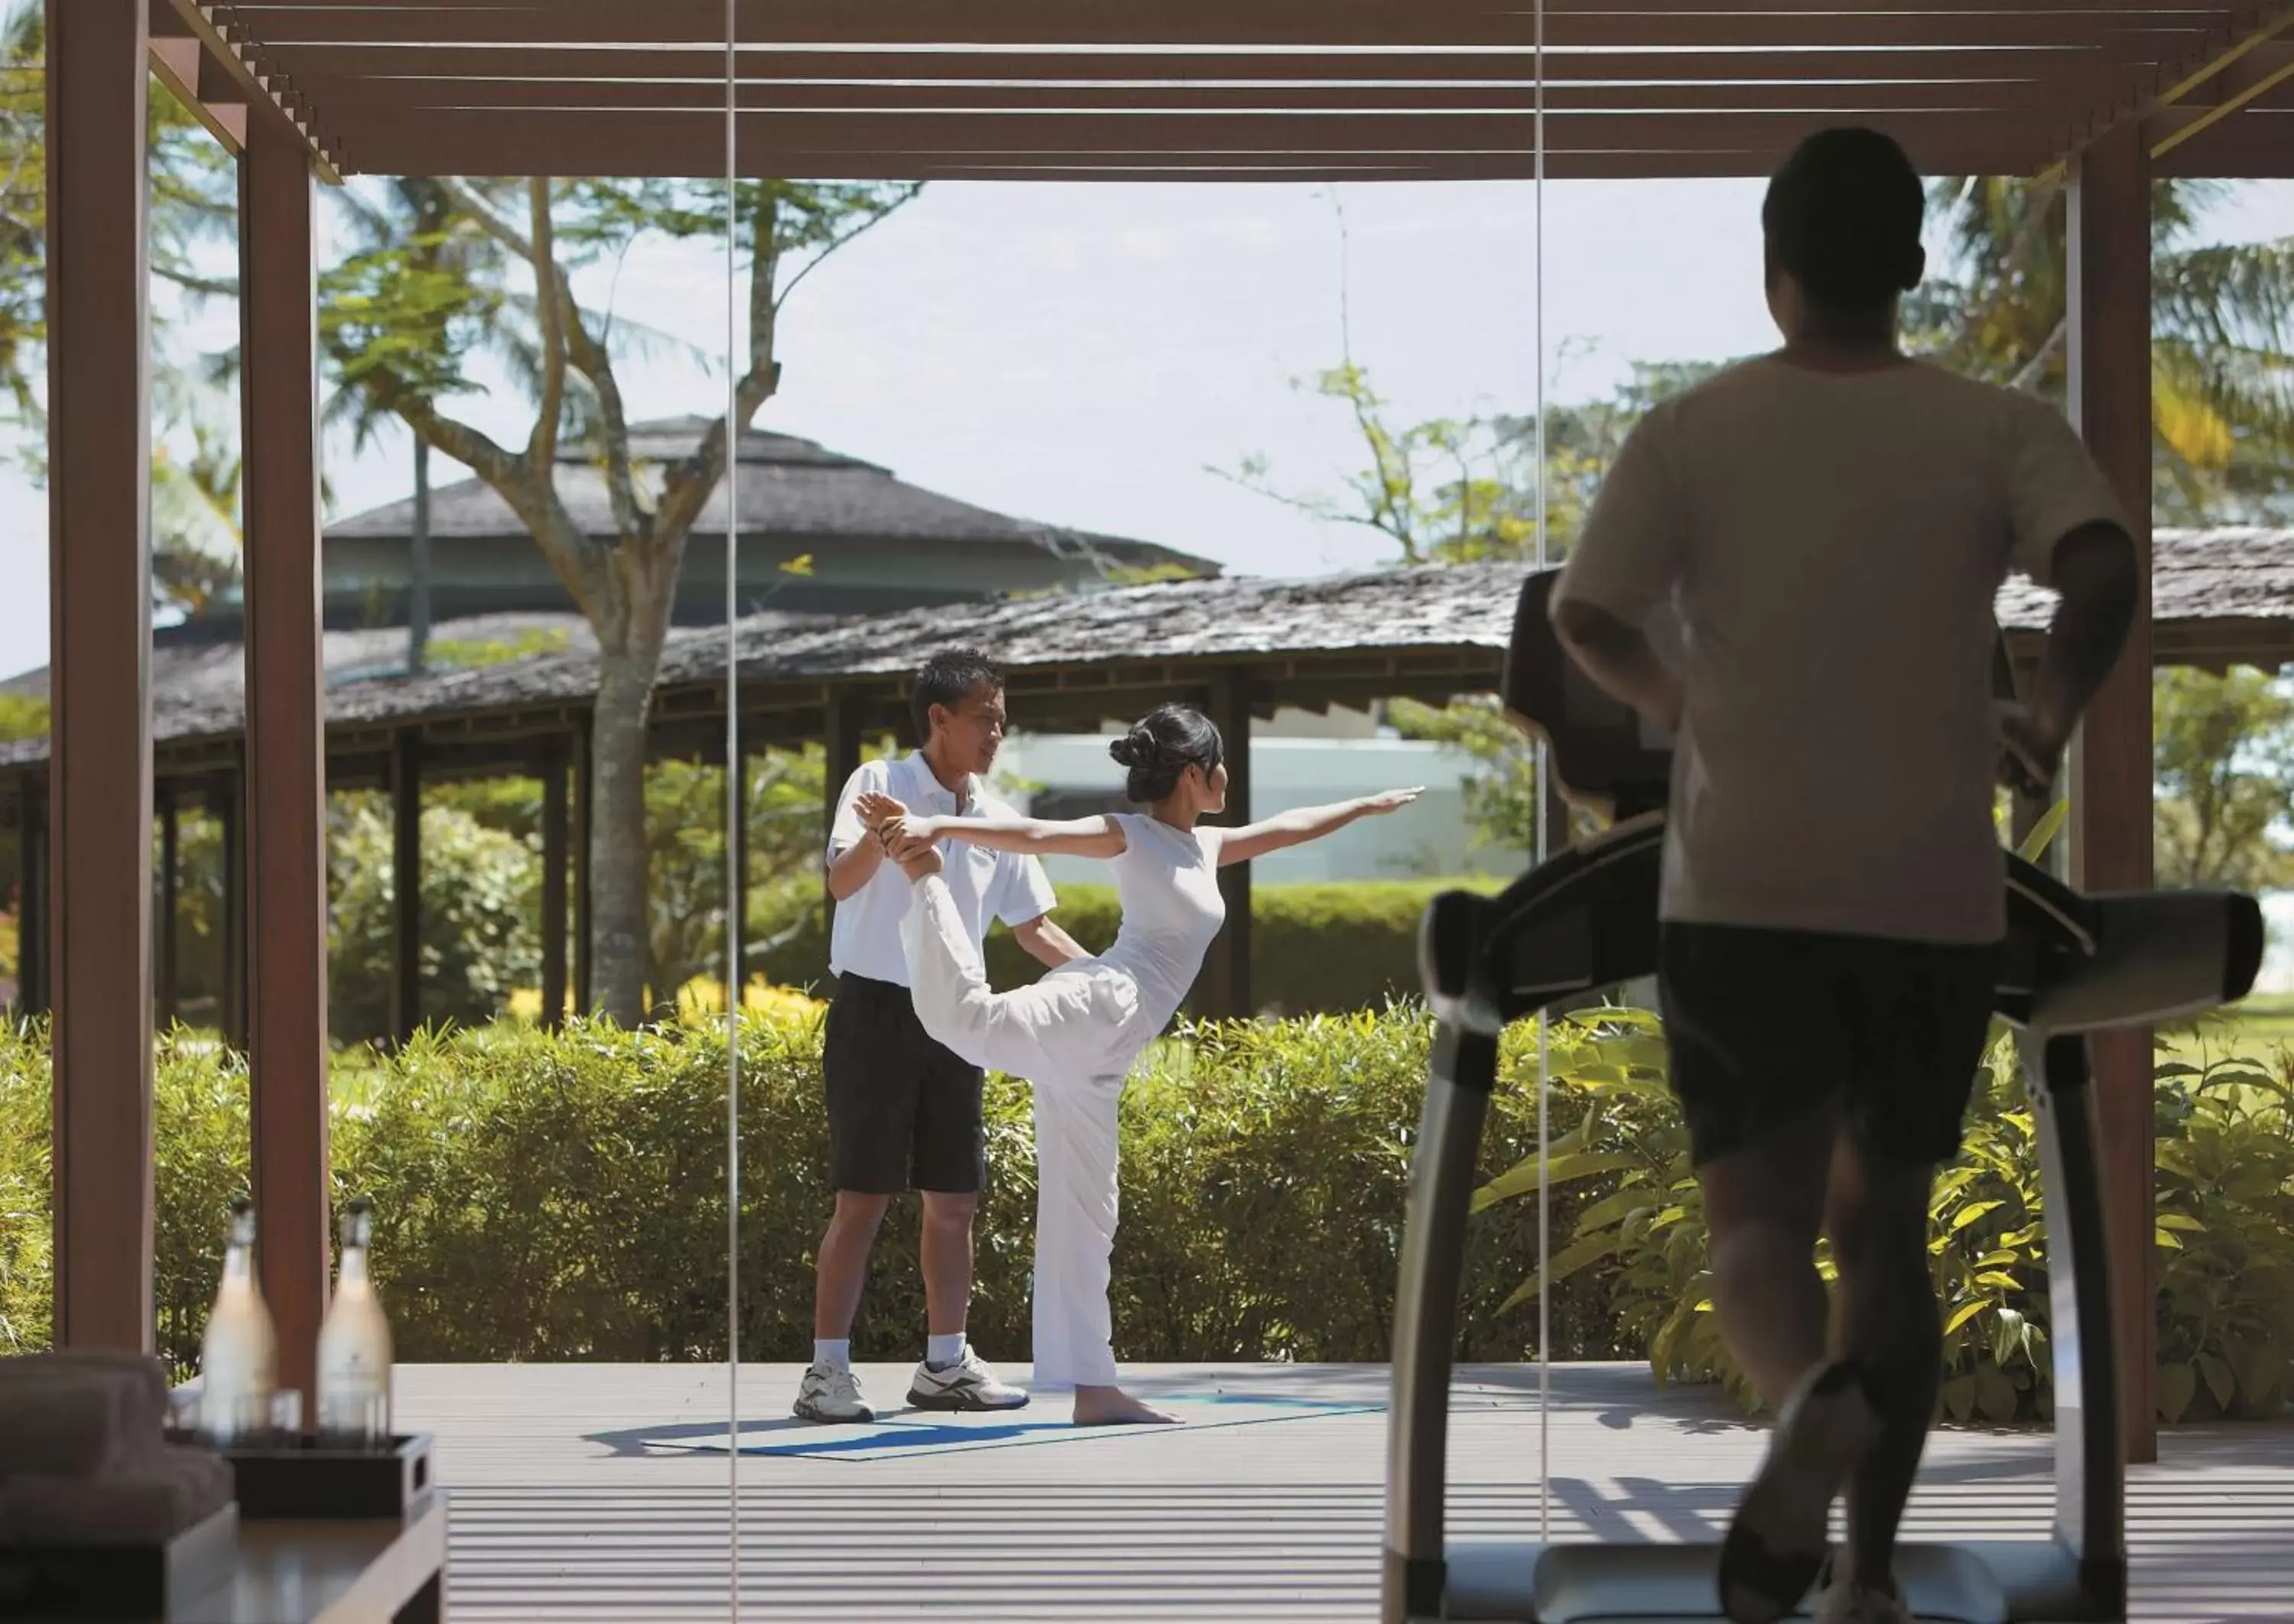 Fitness centre/facilities in Shangri-La Rasa Ria, Kota Kinabalu